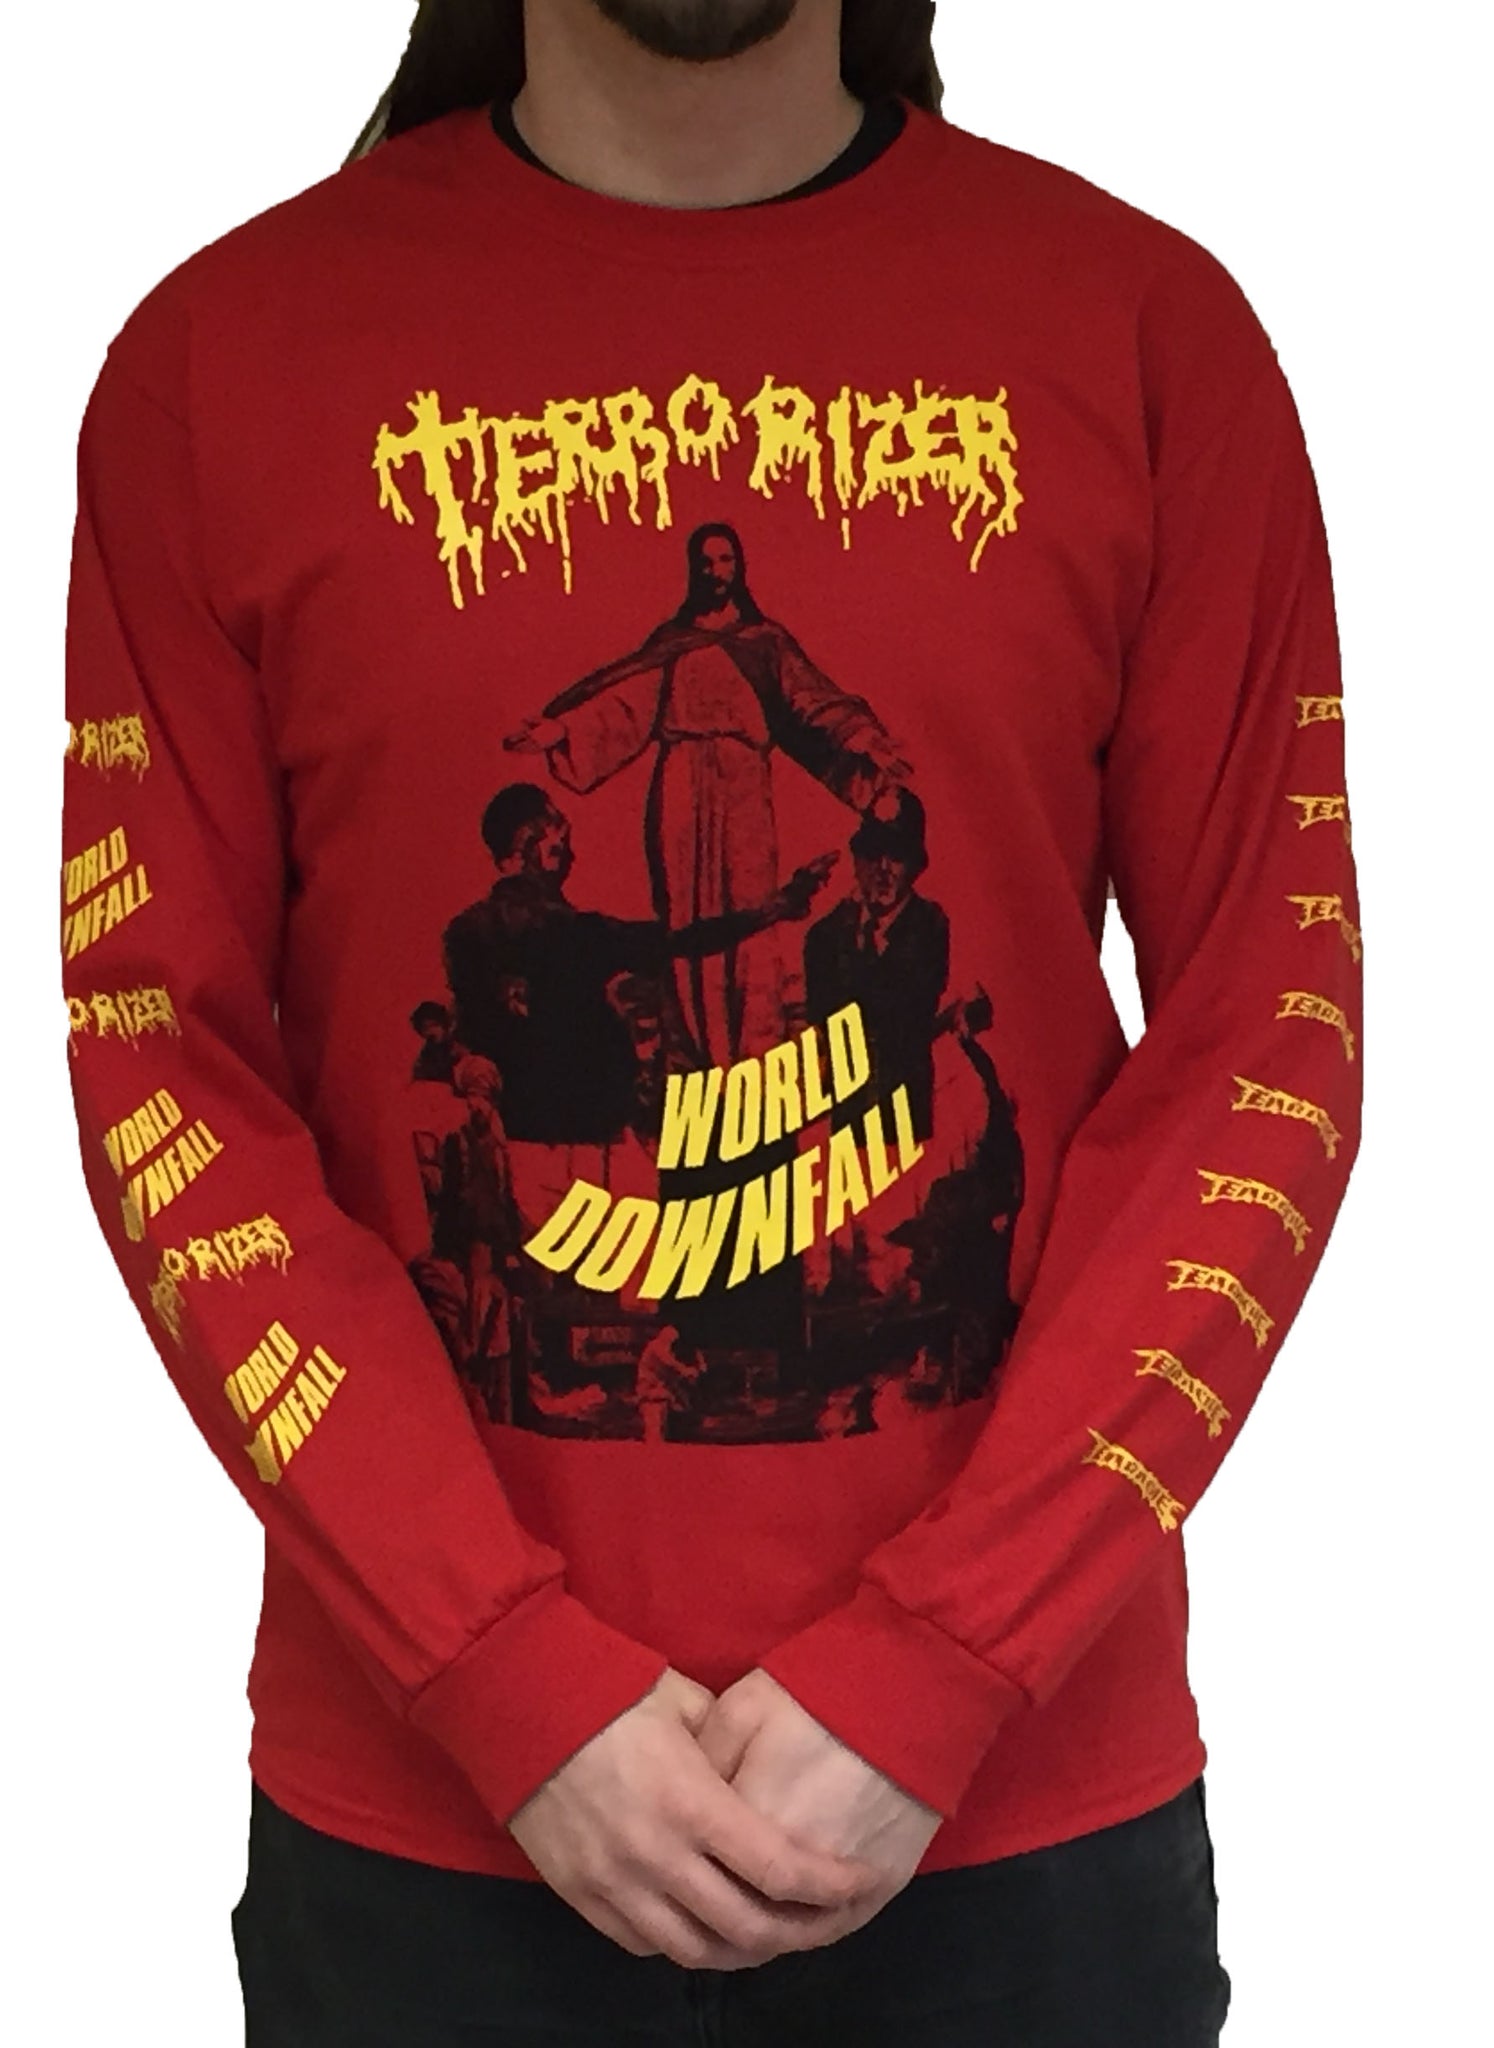 Terrorizer "World Downfall" Red Long Sleeve Shirt